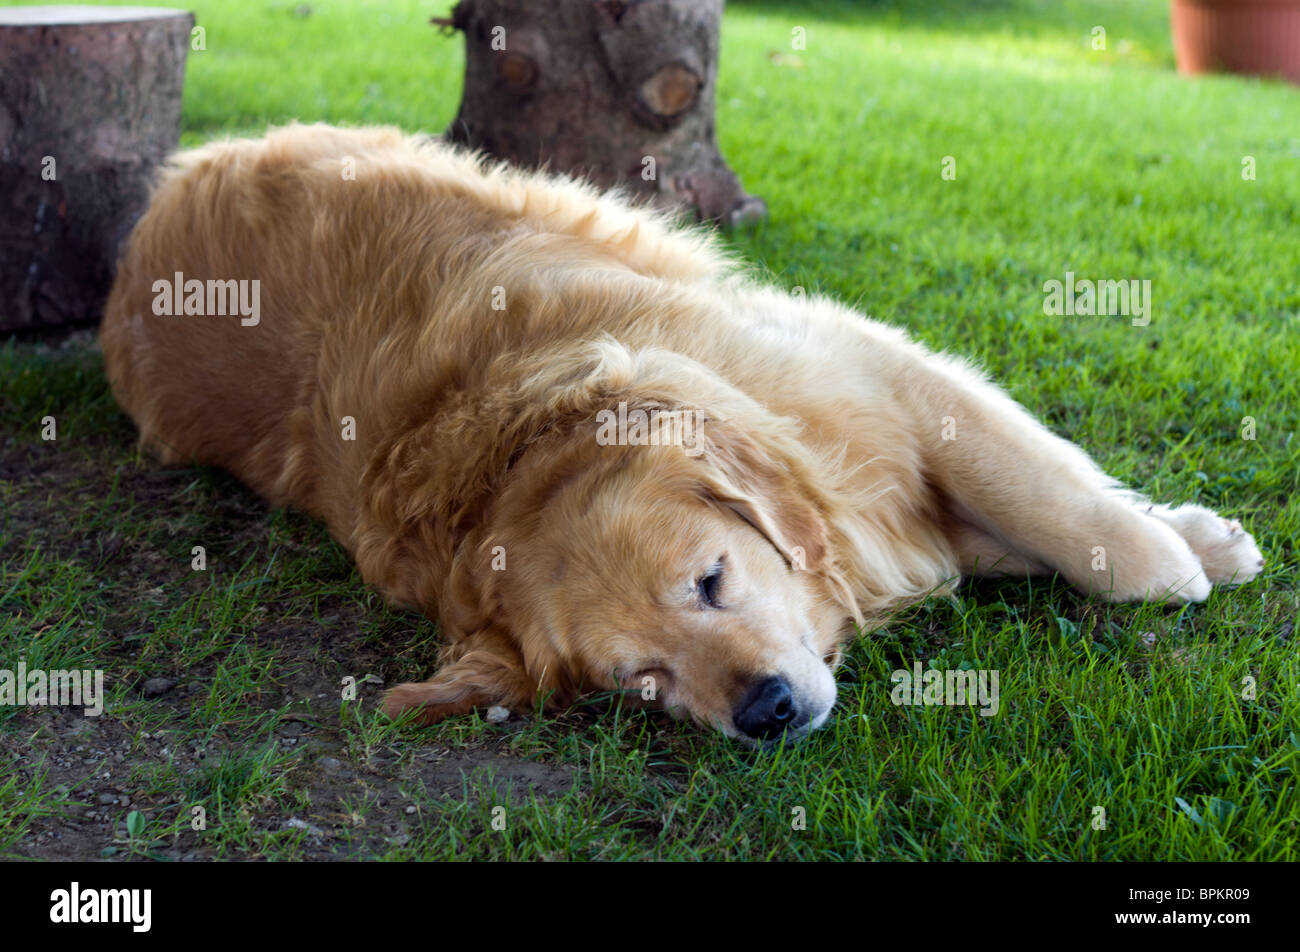 Golden retriever sleeping in the grass. Stock Photo